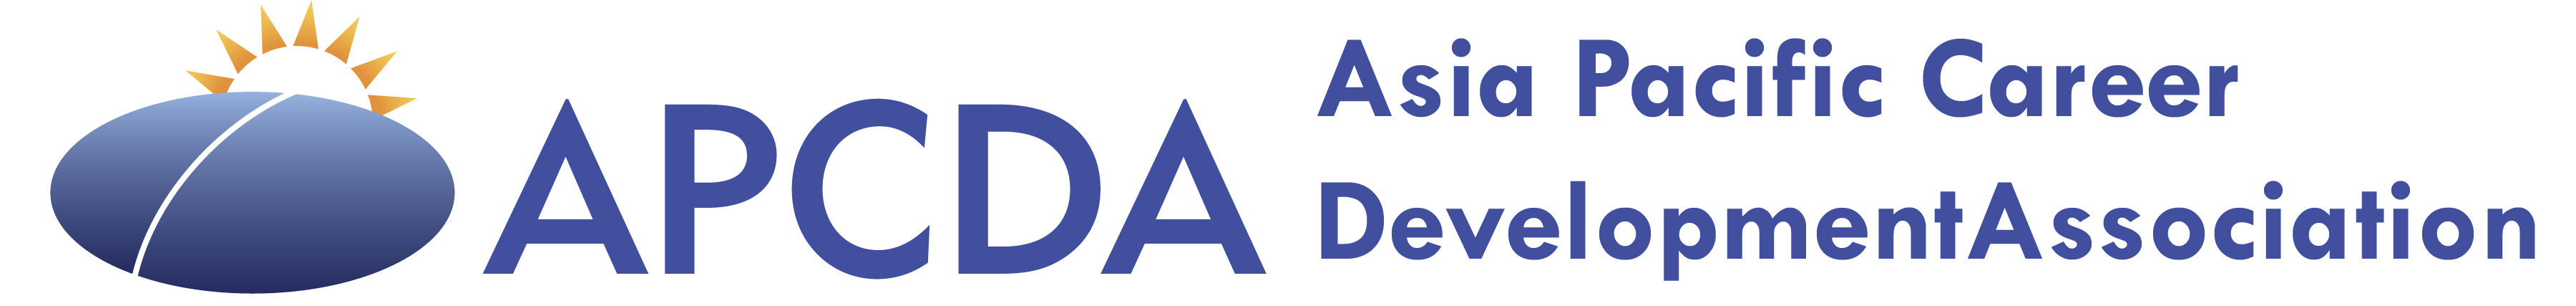 Asia Pacific Career Development Association